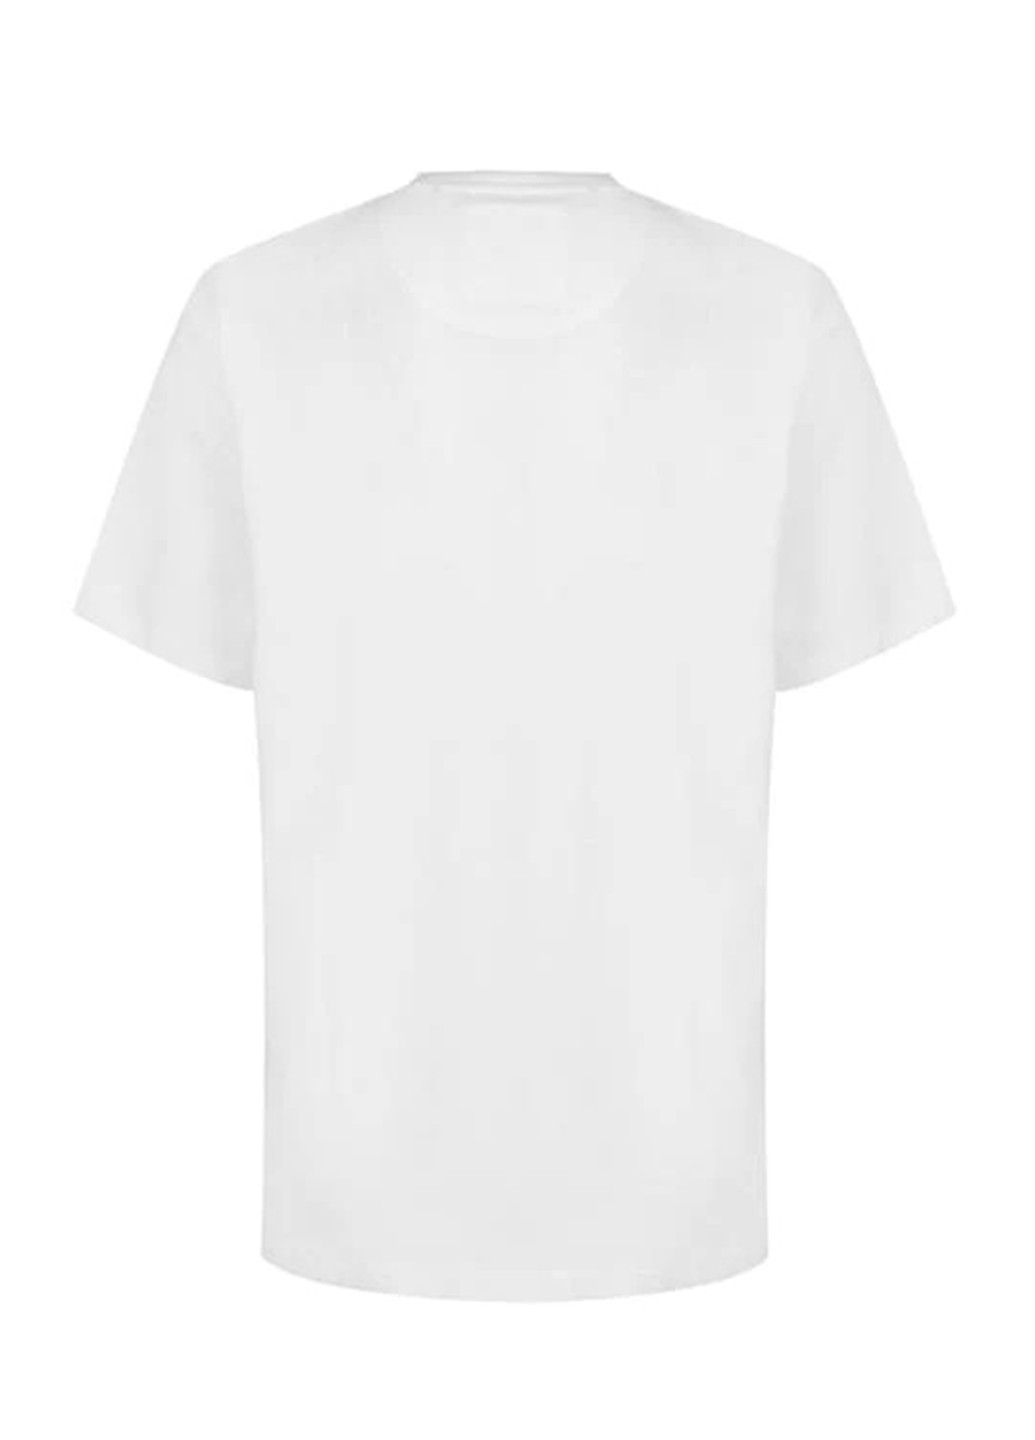 Белая футболка Soulcal & Co